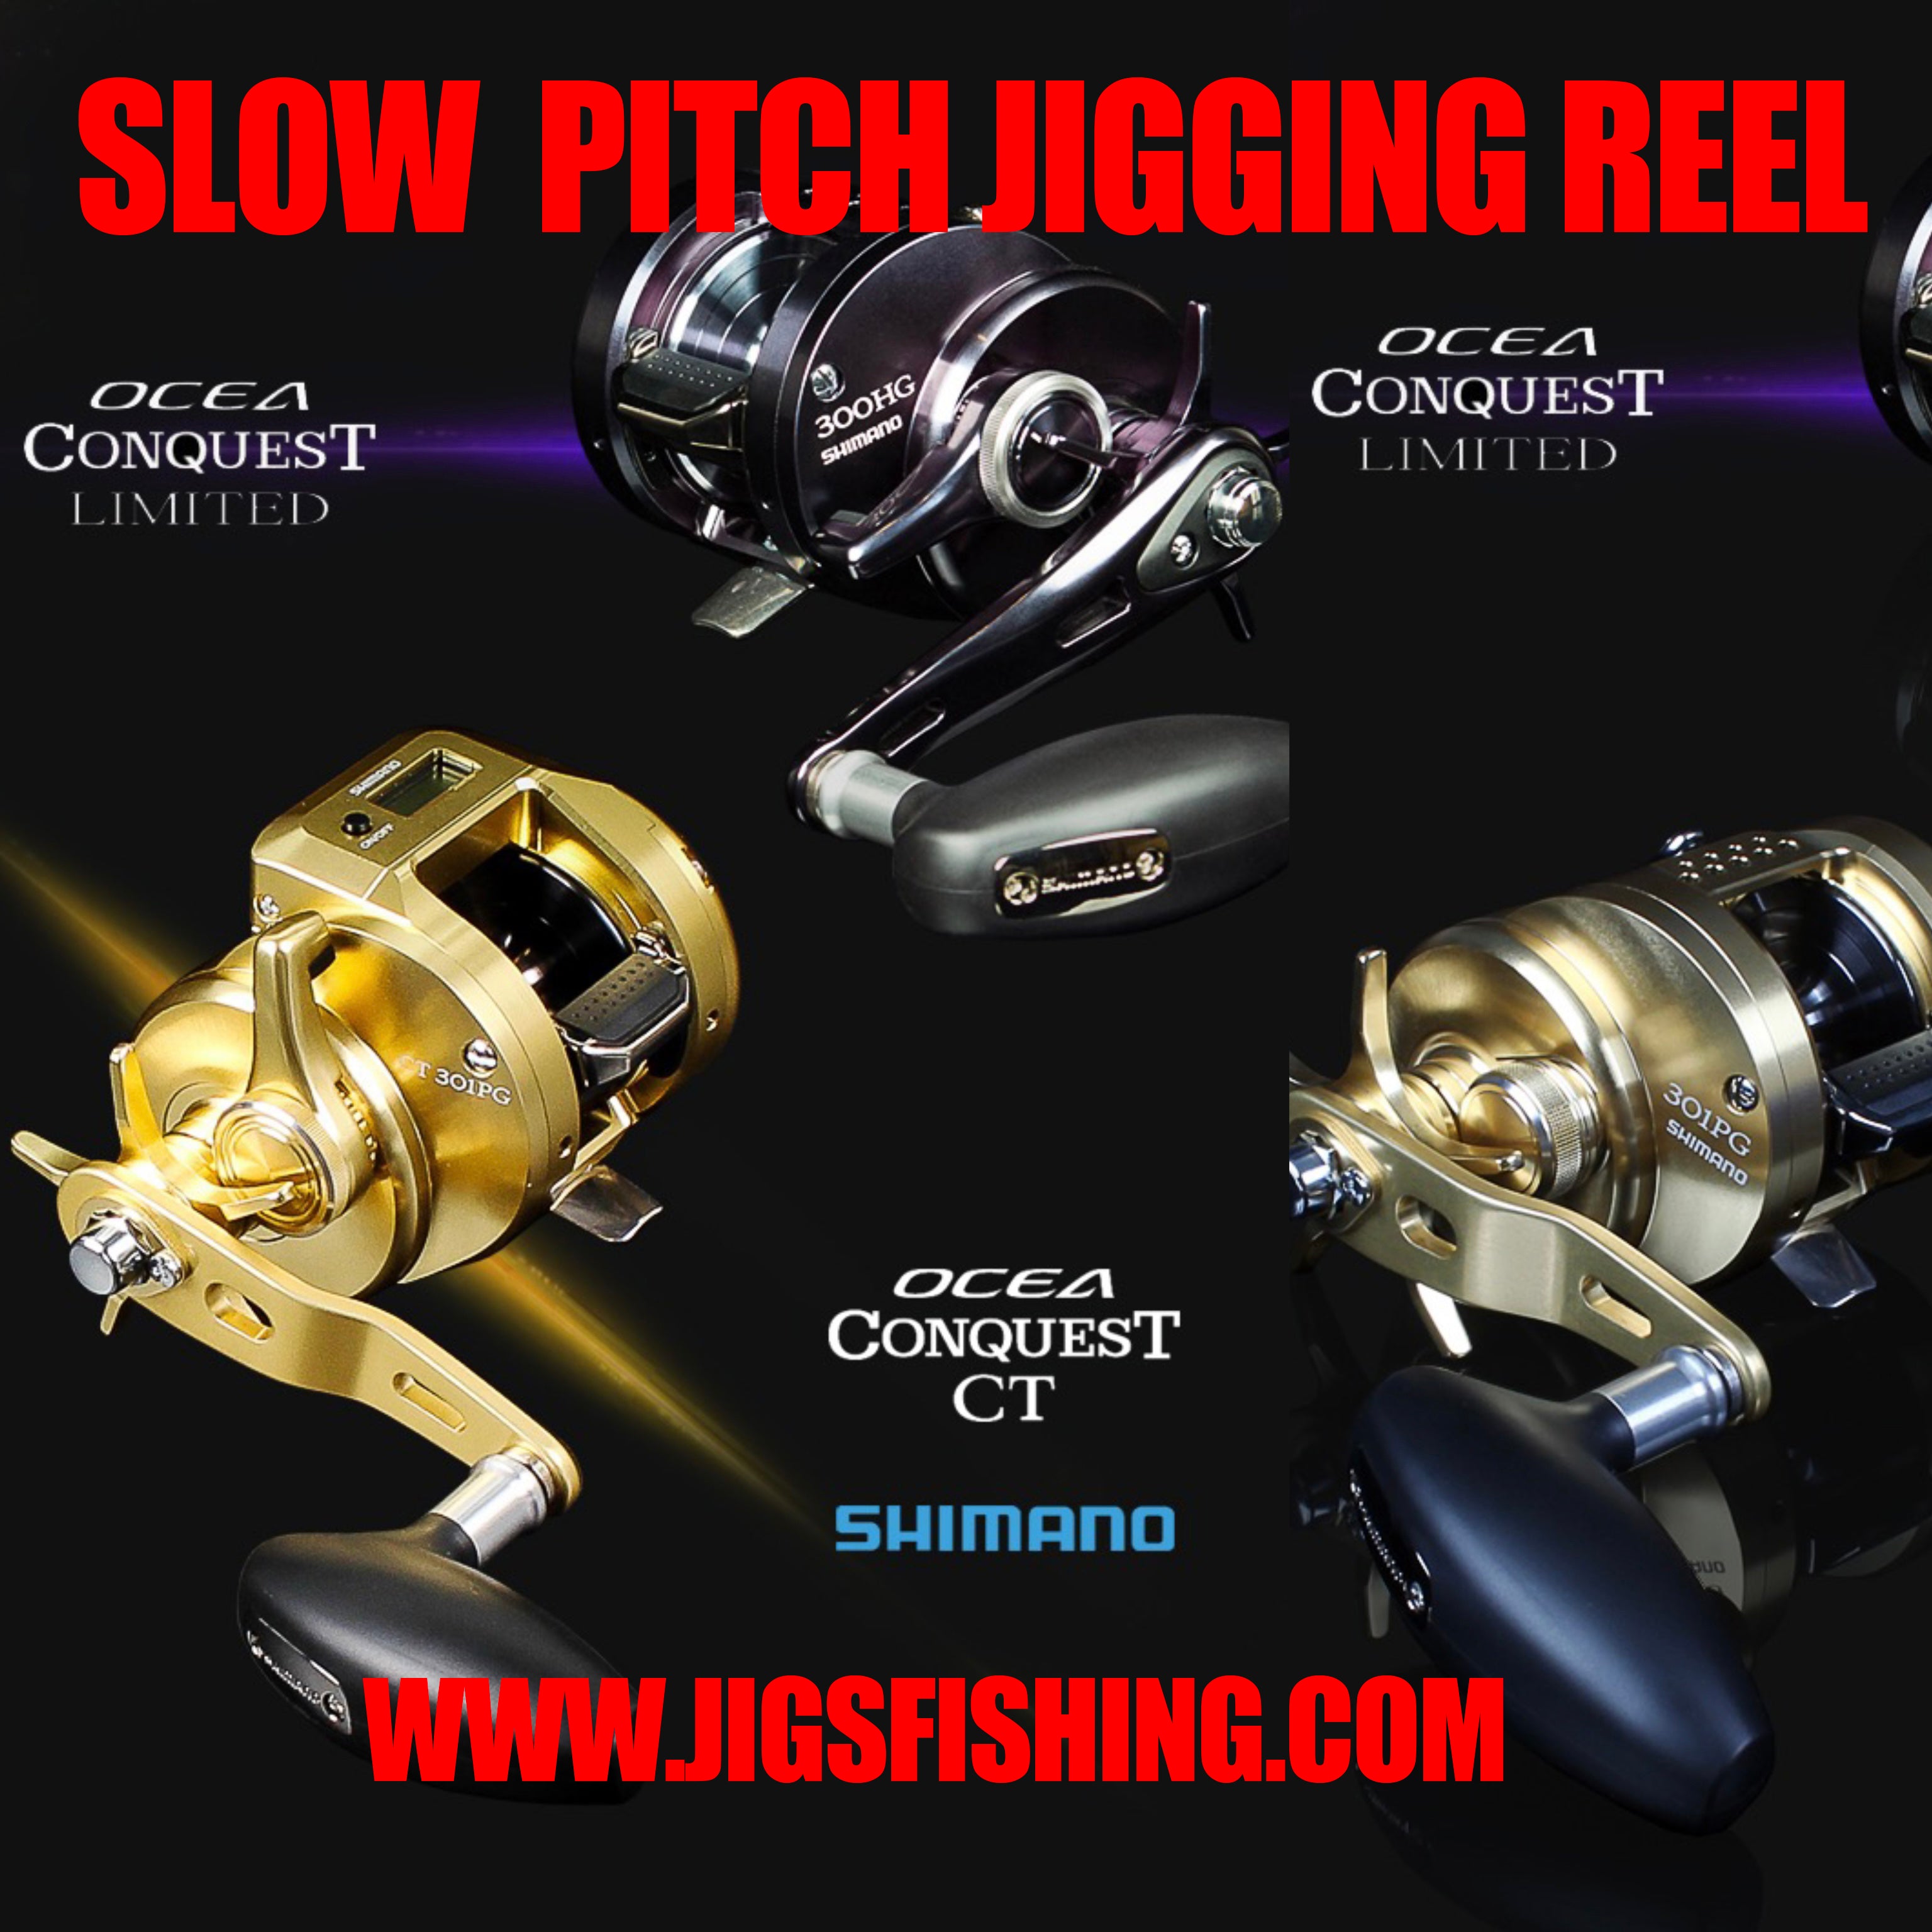 Buy Slow Pitch Jigging Reel online